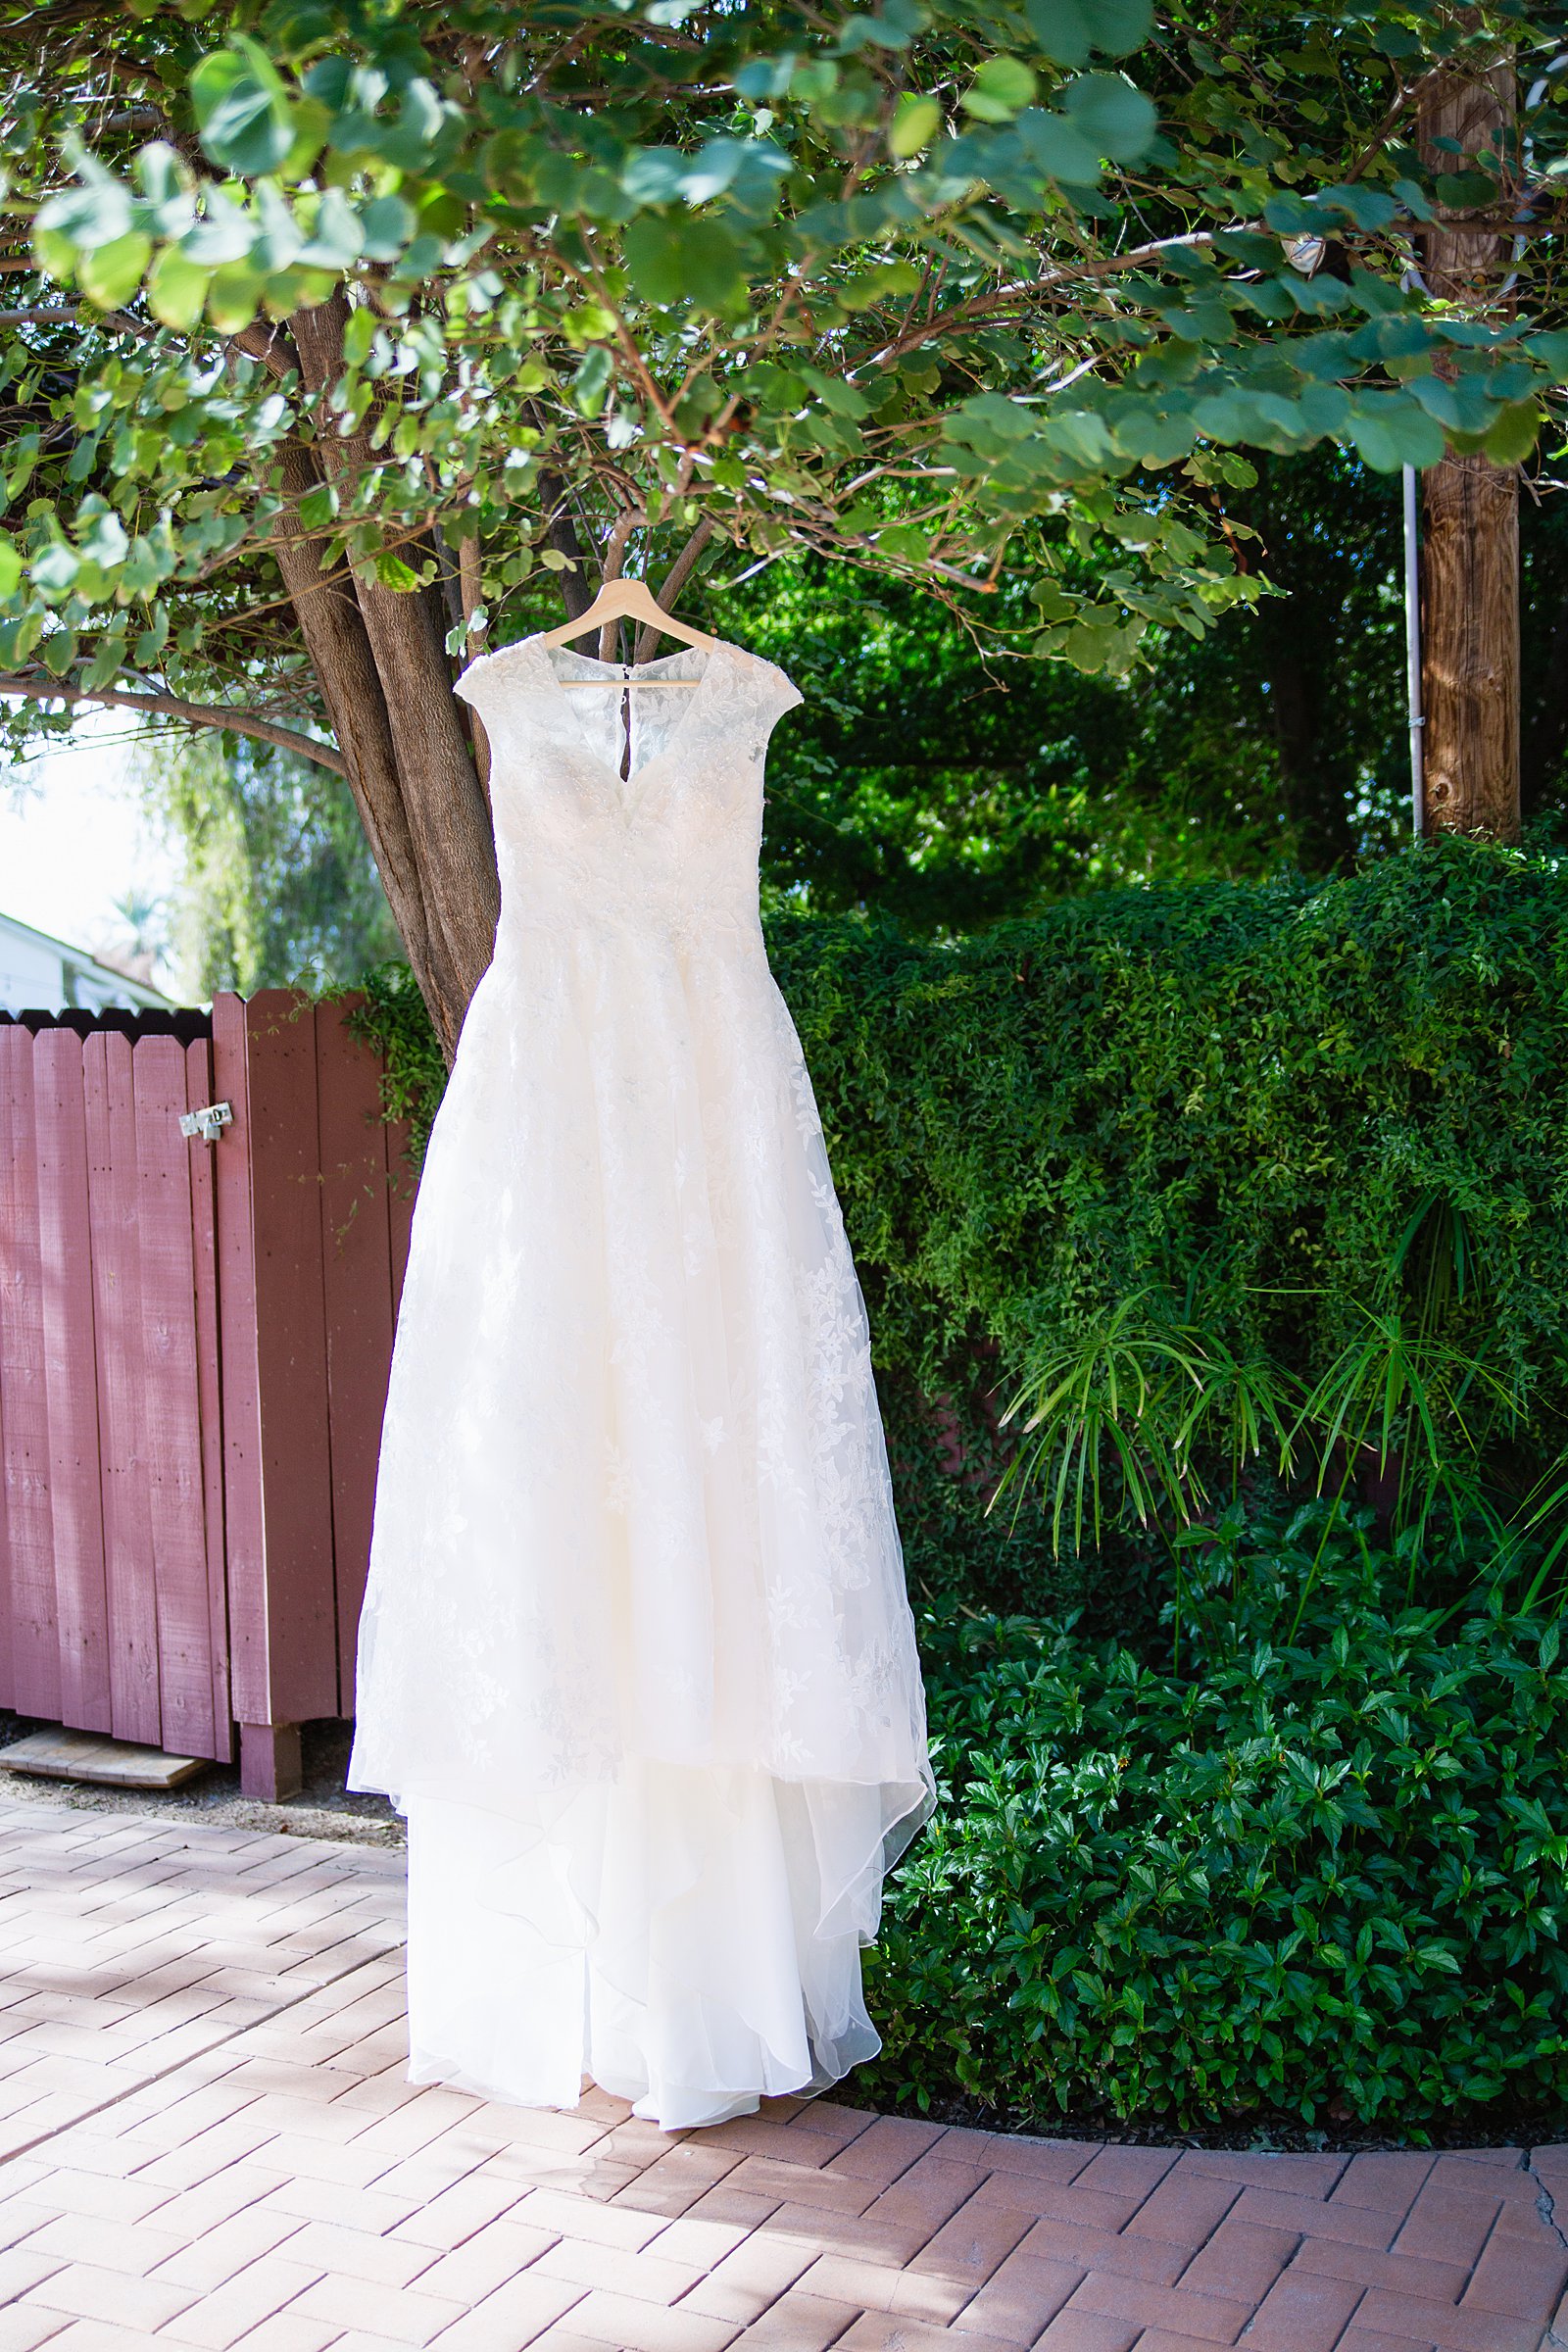 Bride's simple garden wedding dress for her Valley Garden Center wedding by PMA Photography.